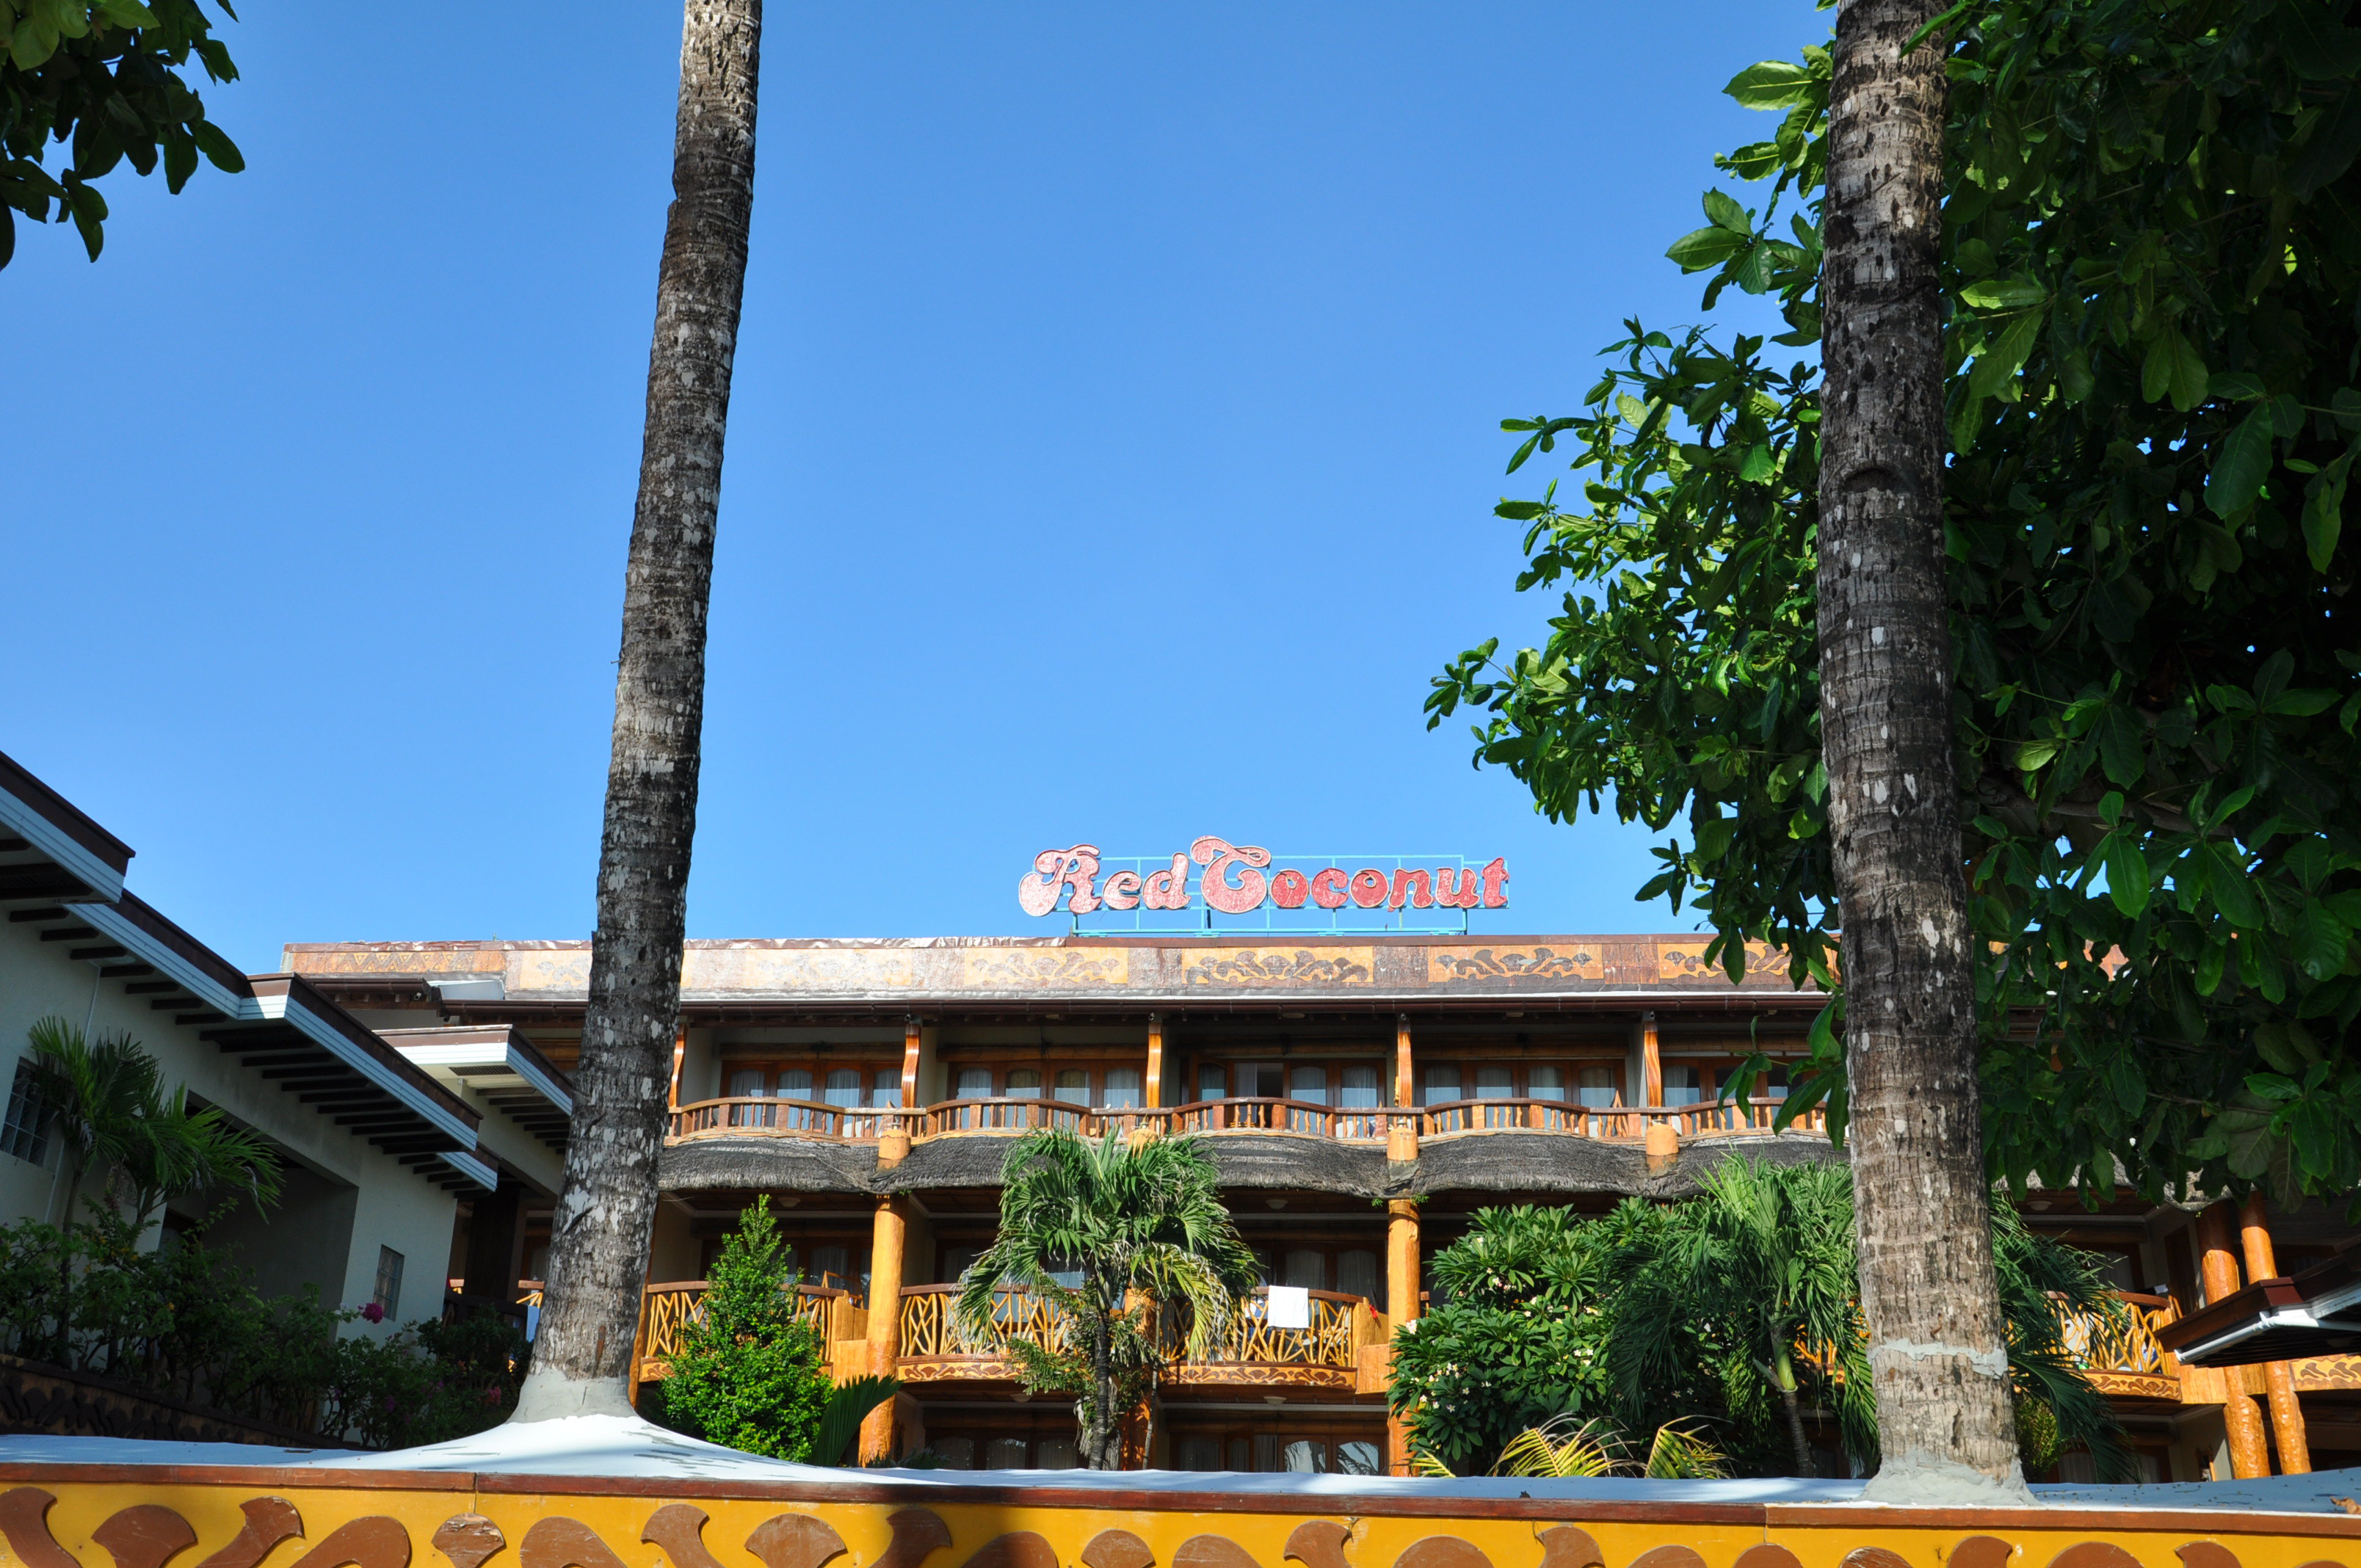 Red Coconut Beach Restaurant / Station 2, 马莱Aklan Province5608 菲律宾